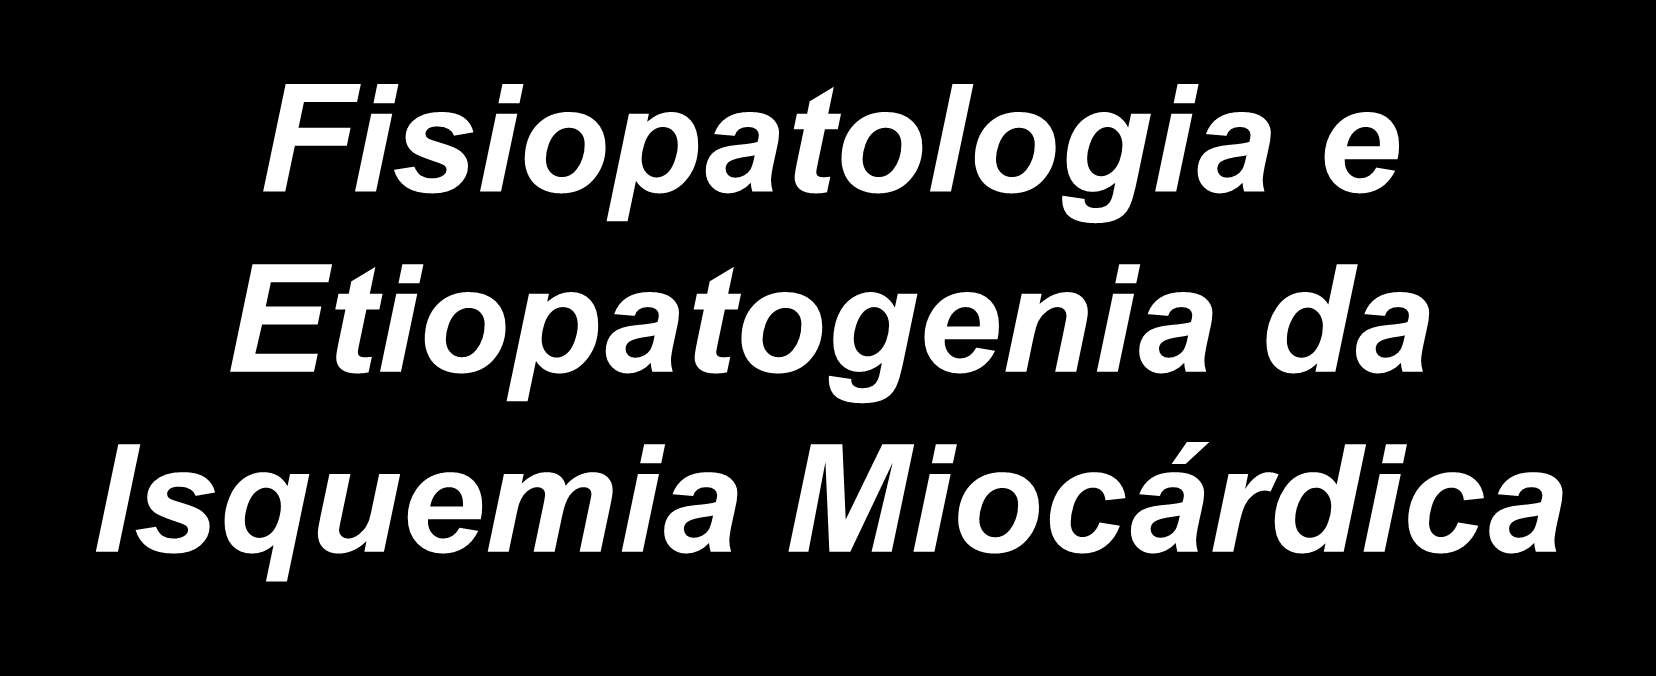 Fisiopatologia e Etiopatogenia da Isquemia Miocárdica Paulo Magno Martins